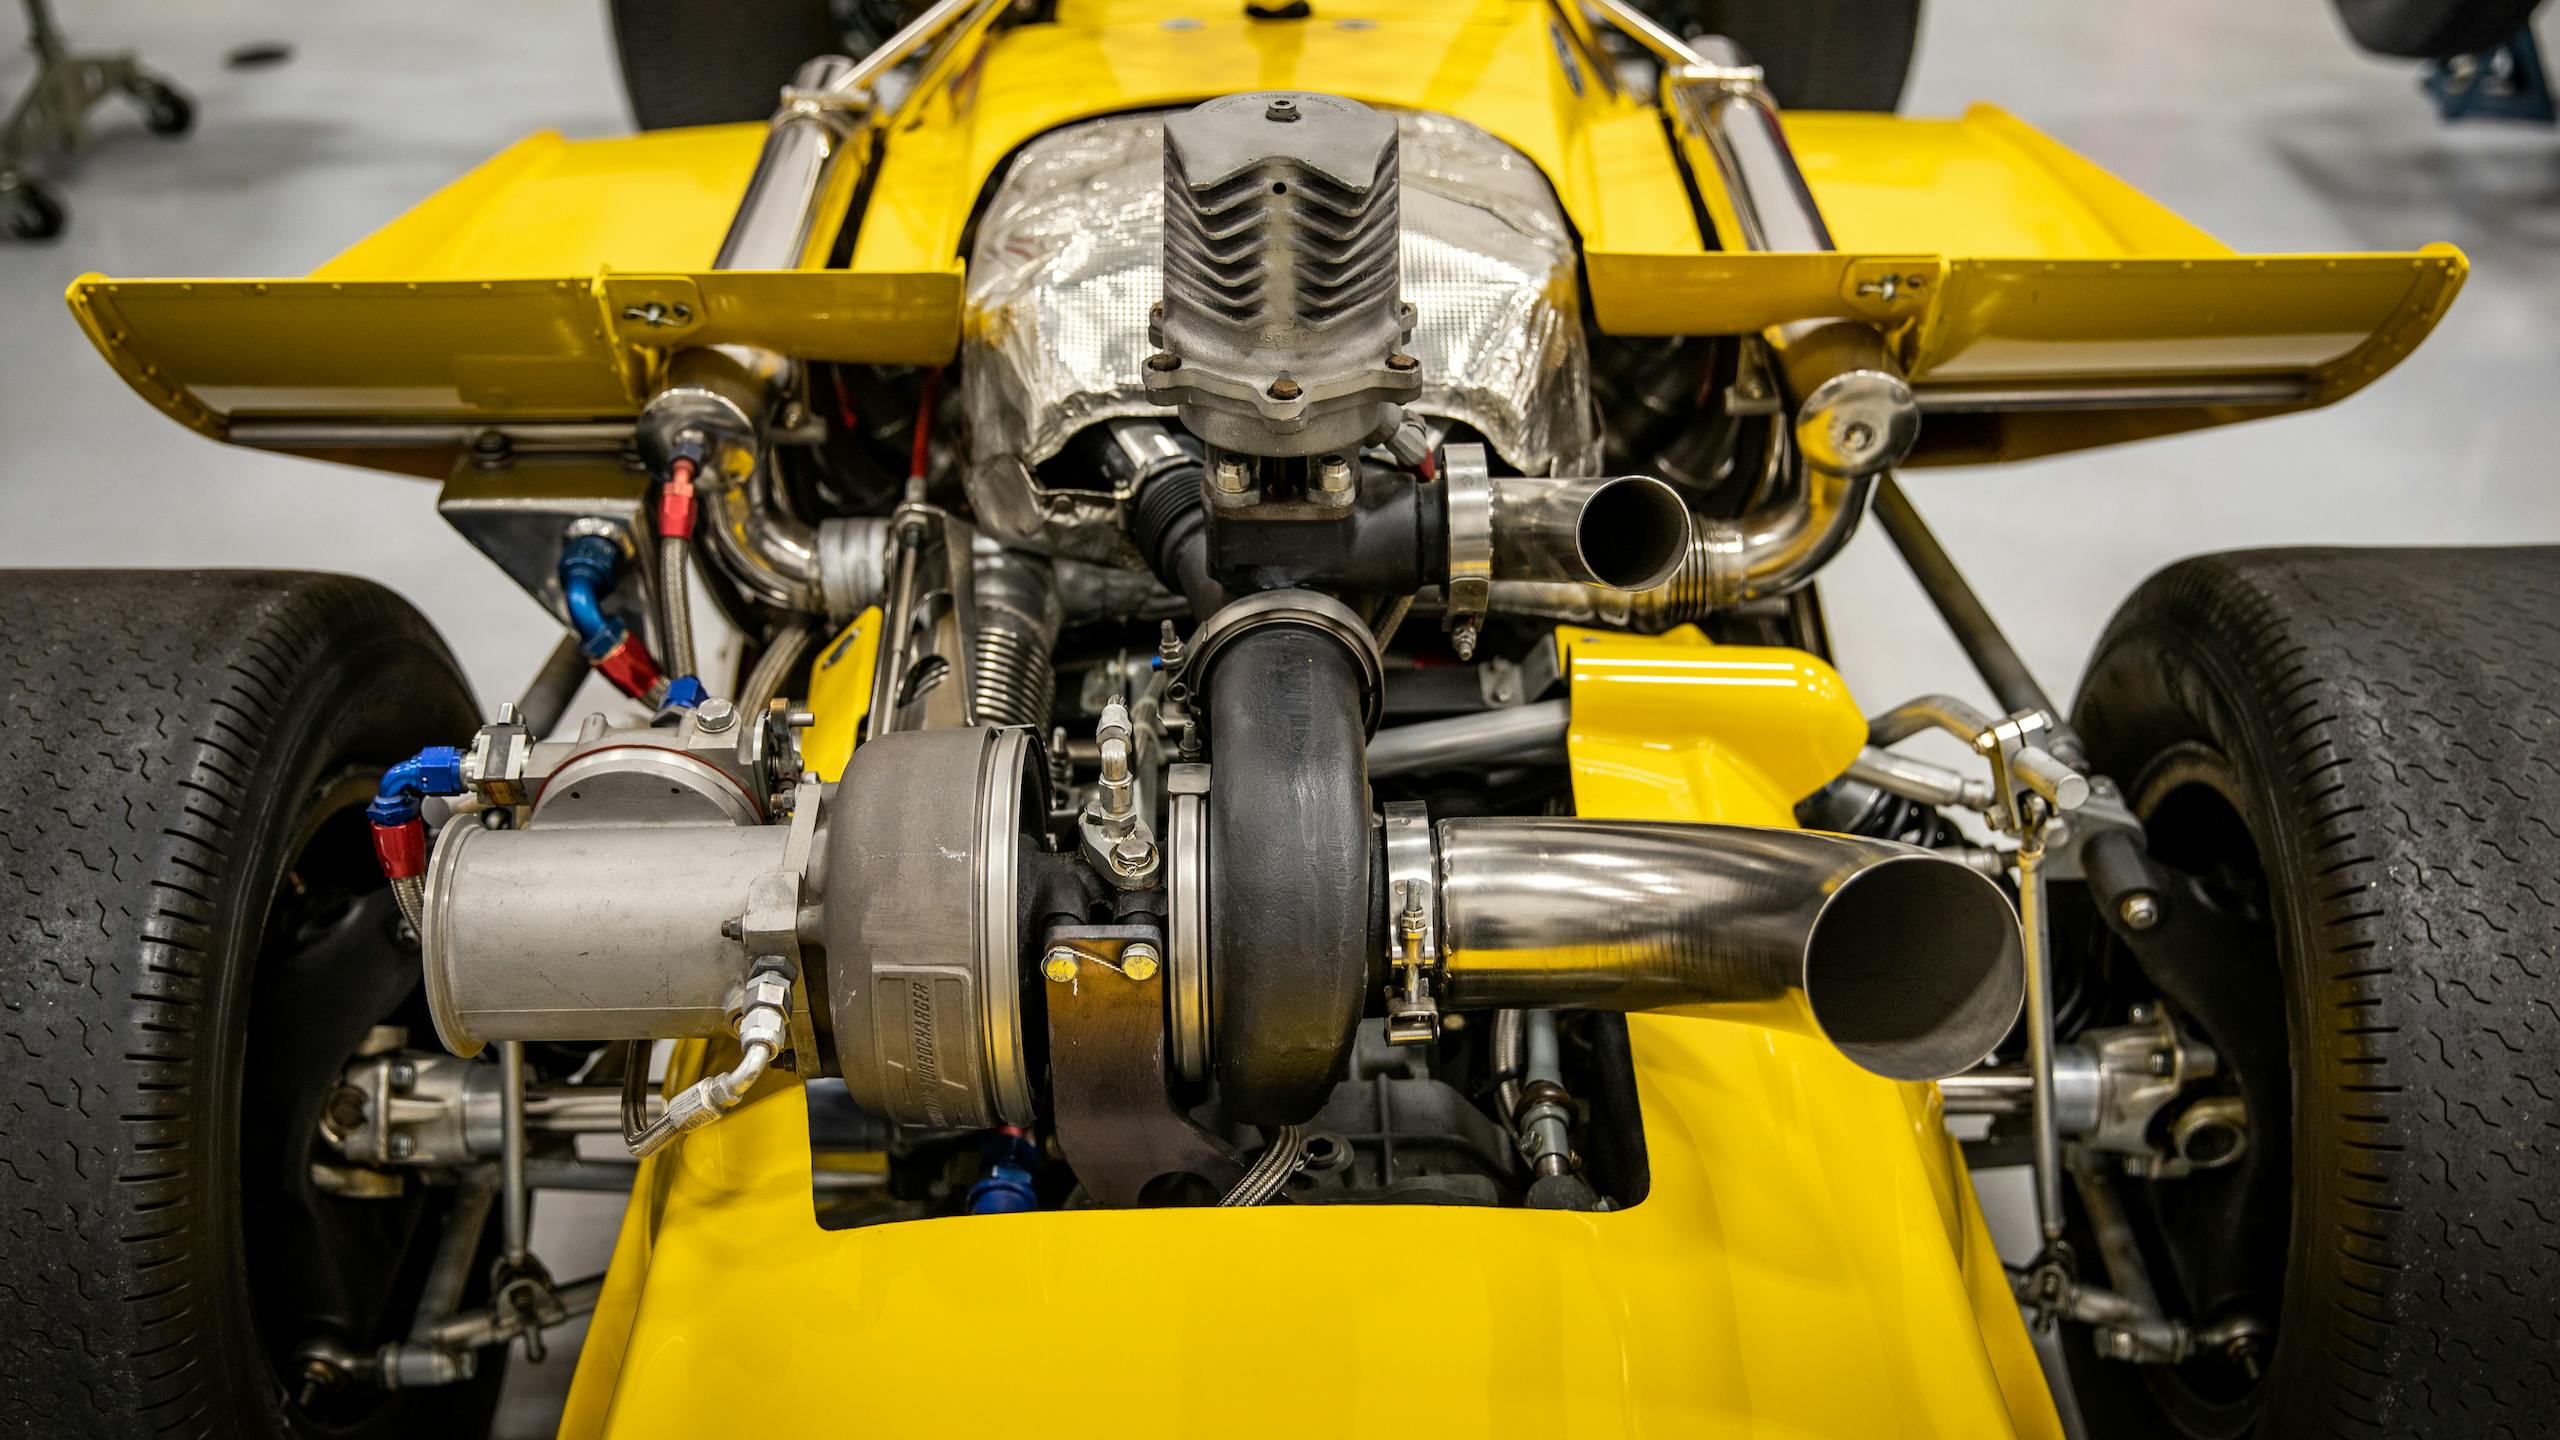 Turn 4 Restorations yellow racer engine